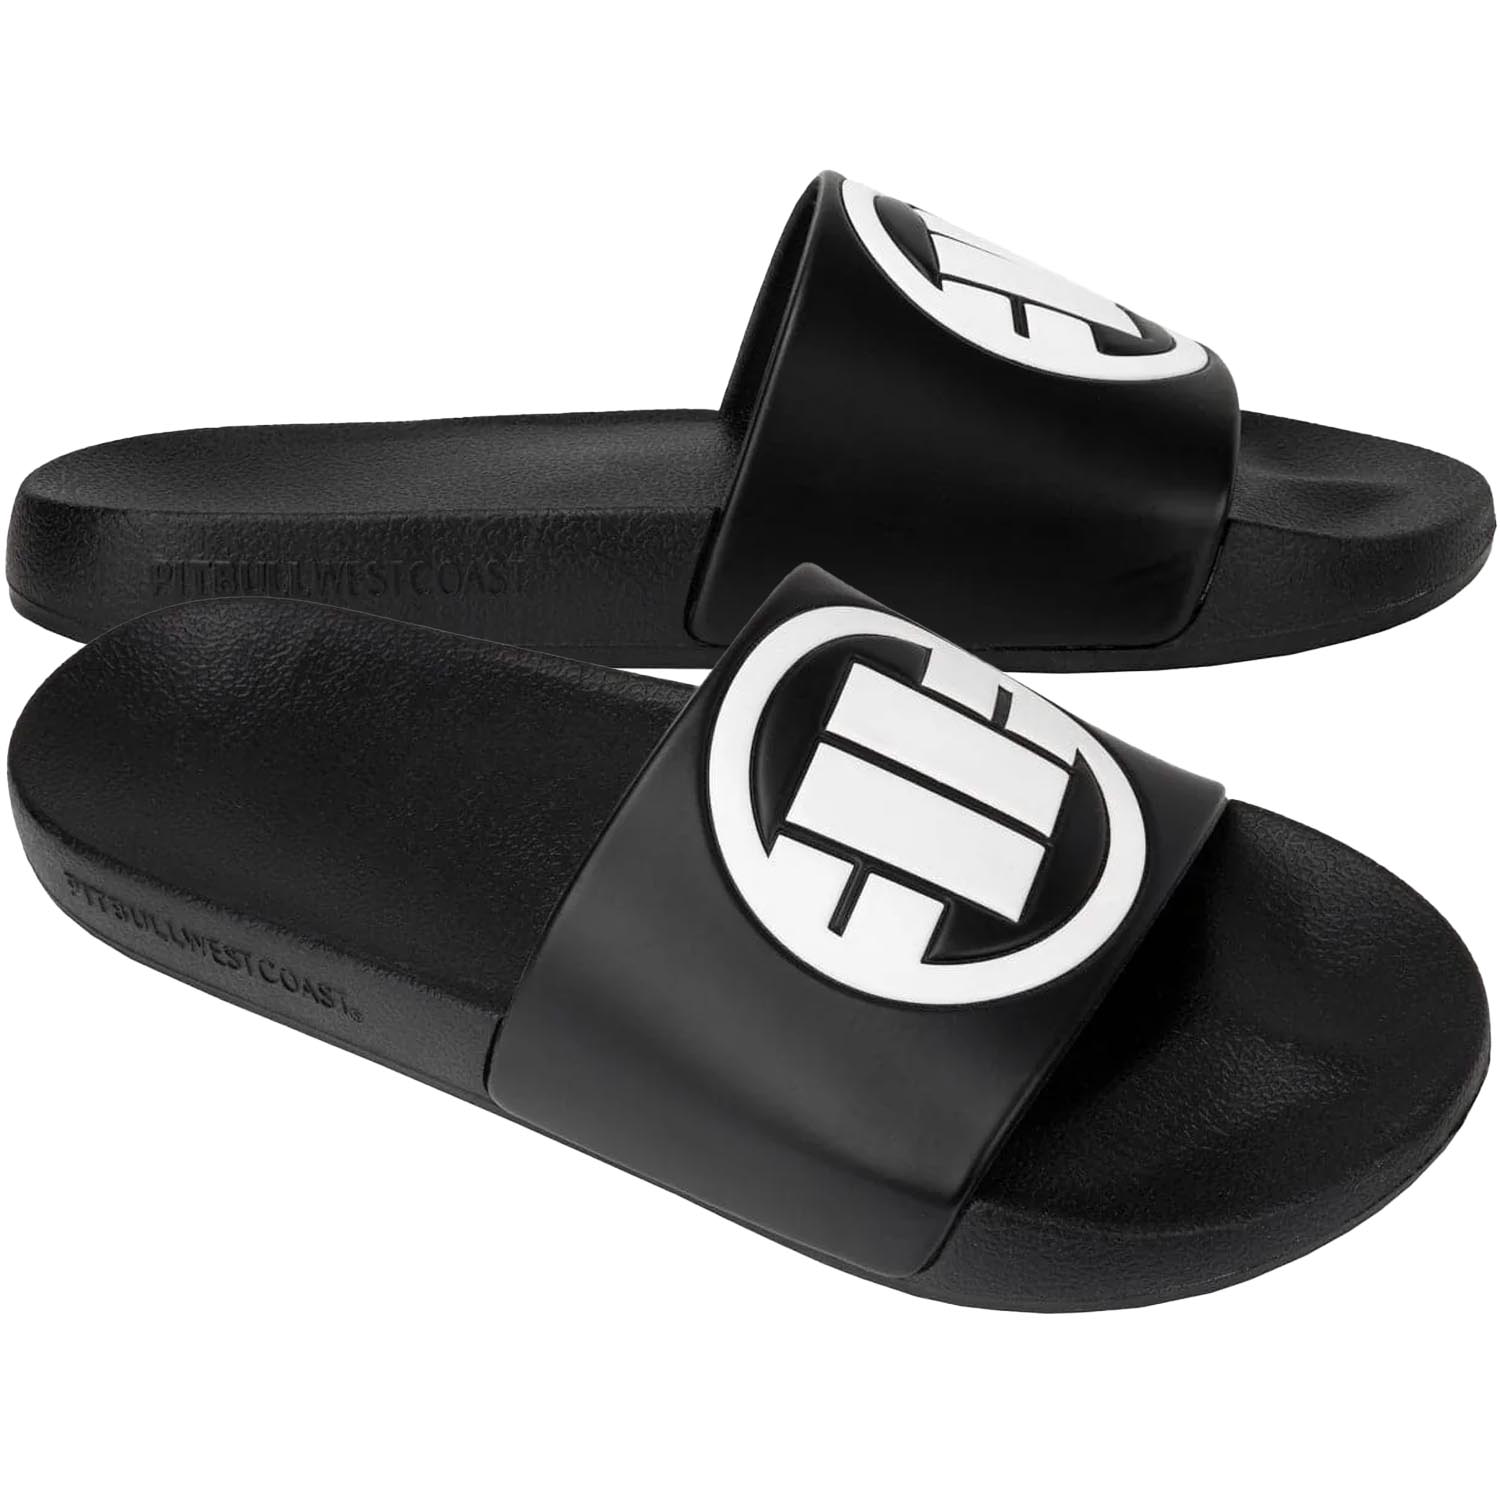 Pit Bull West Coast, Flip Flops, New Logo, black-white, 42